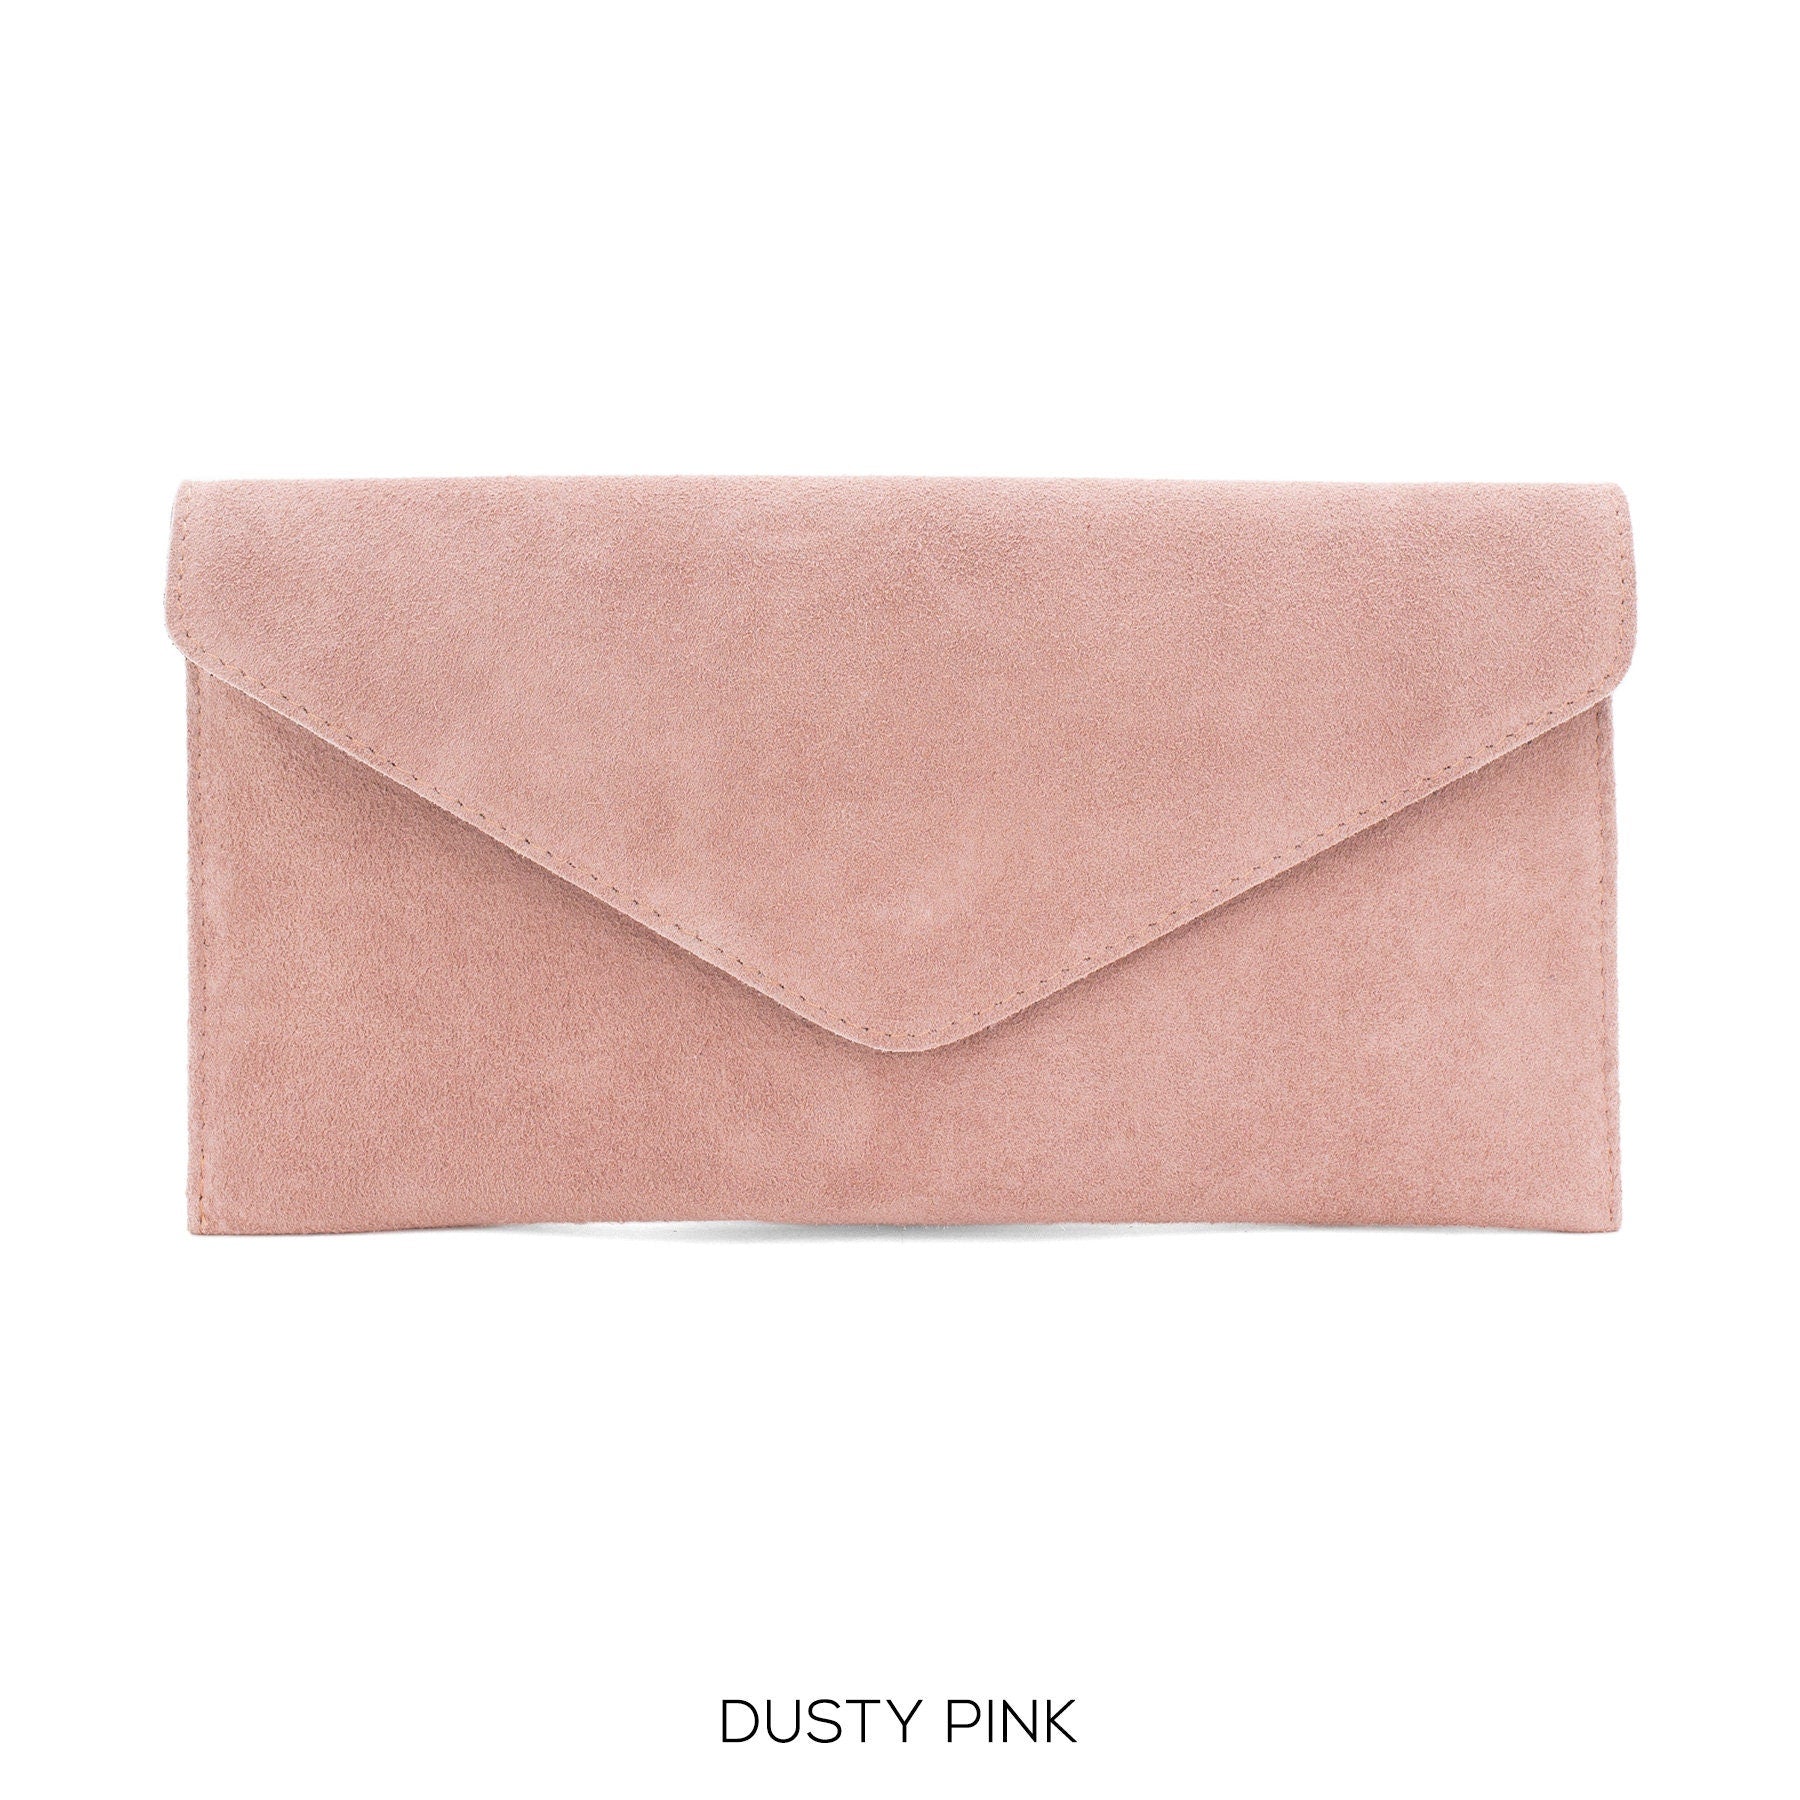 Dusty Pink Envelope Clutch Bag